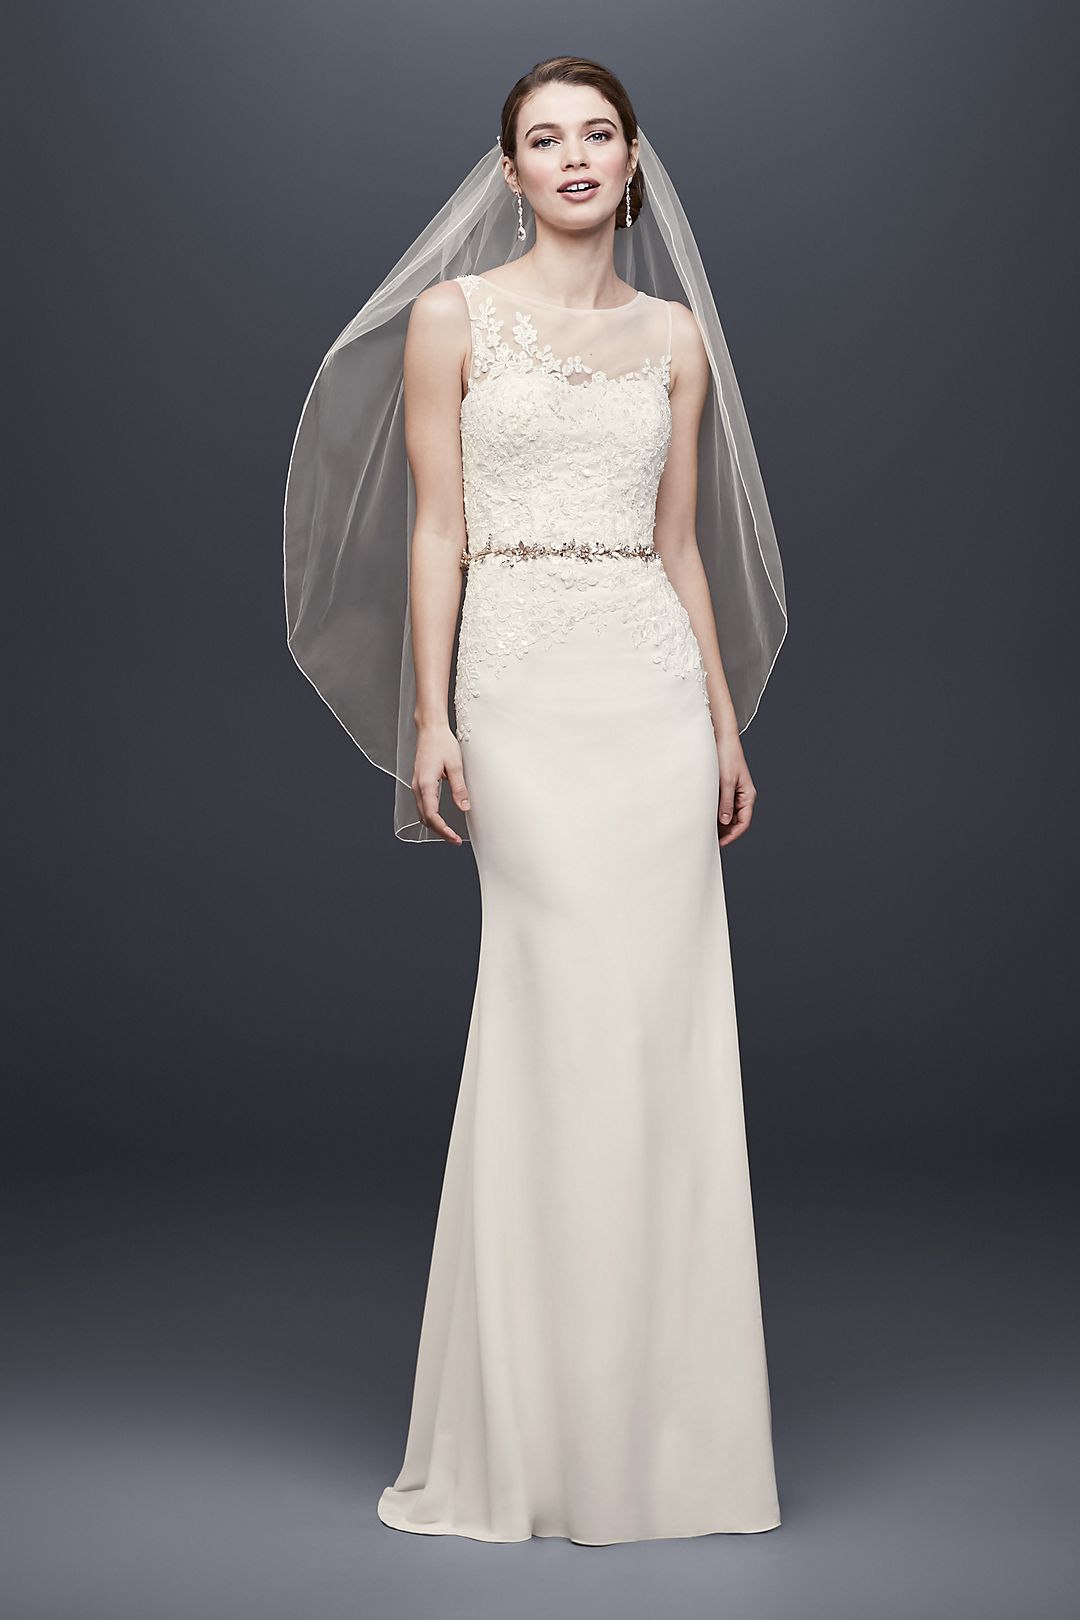 Crepe Sheath Wedding Dress with Illusion Neckline Image 1